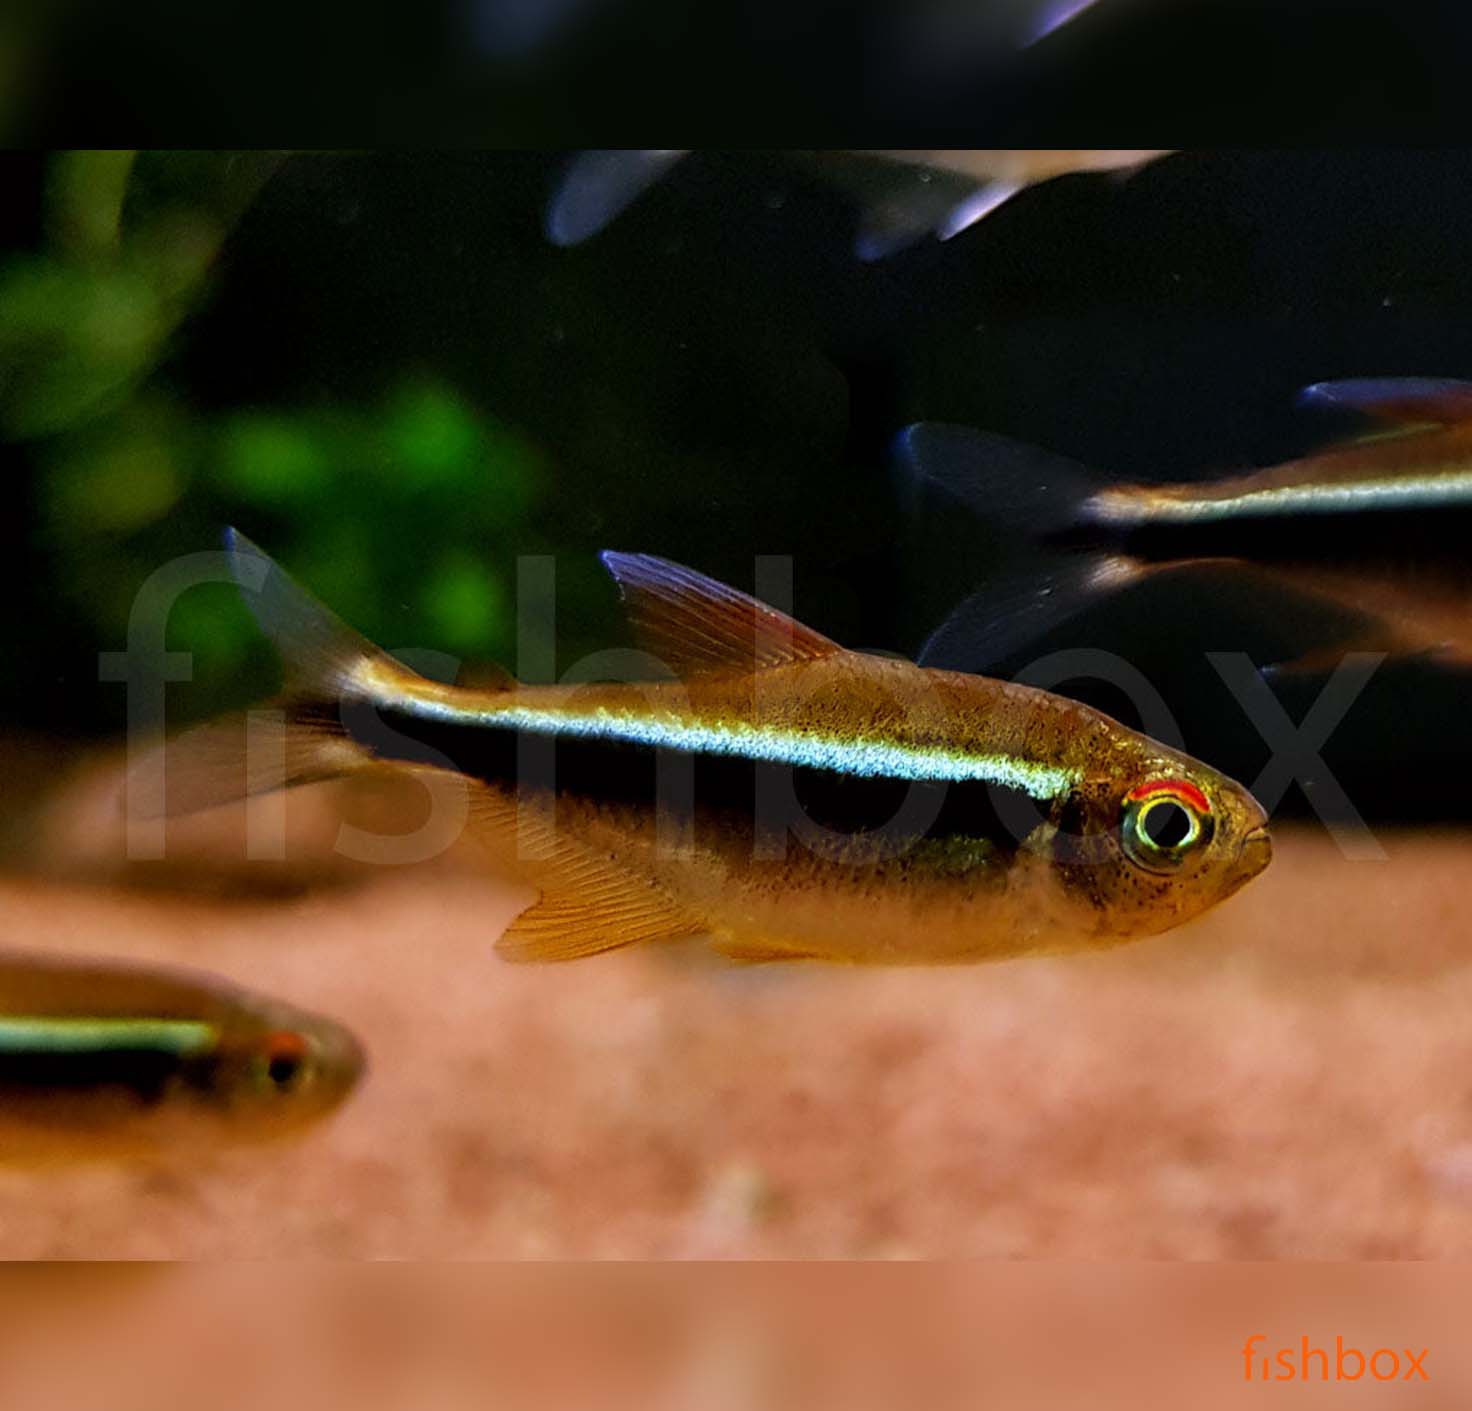 Hyphessobrycon herbertaxelrodi – črna neonka / Black Neon Tetra - fishbox